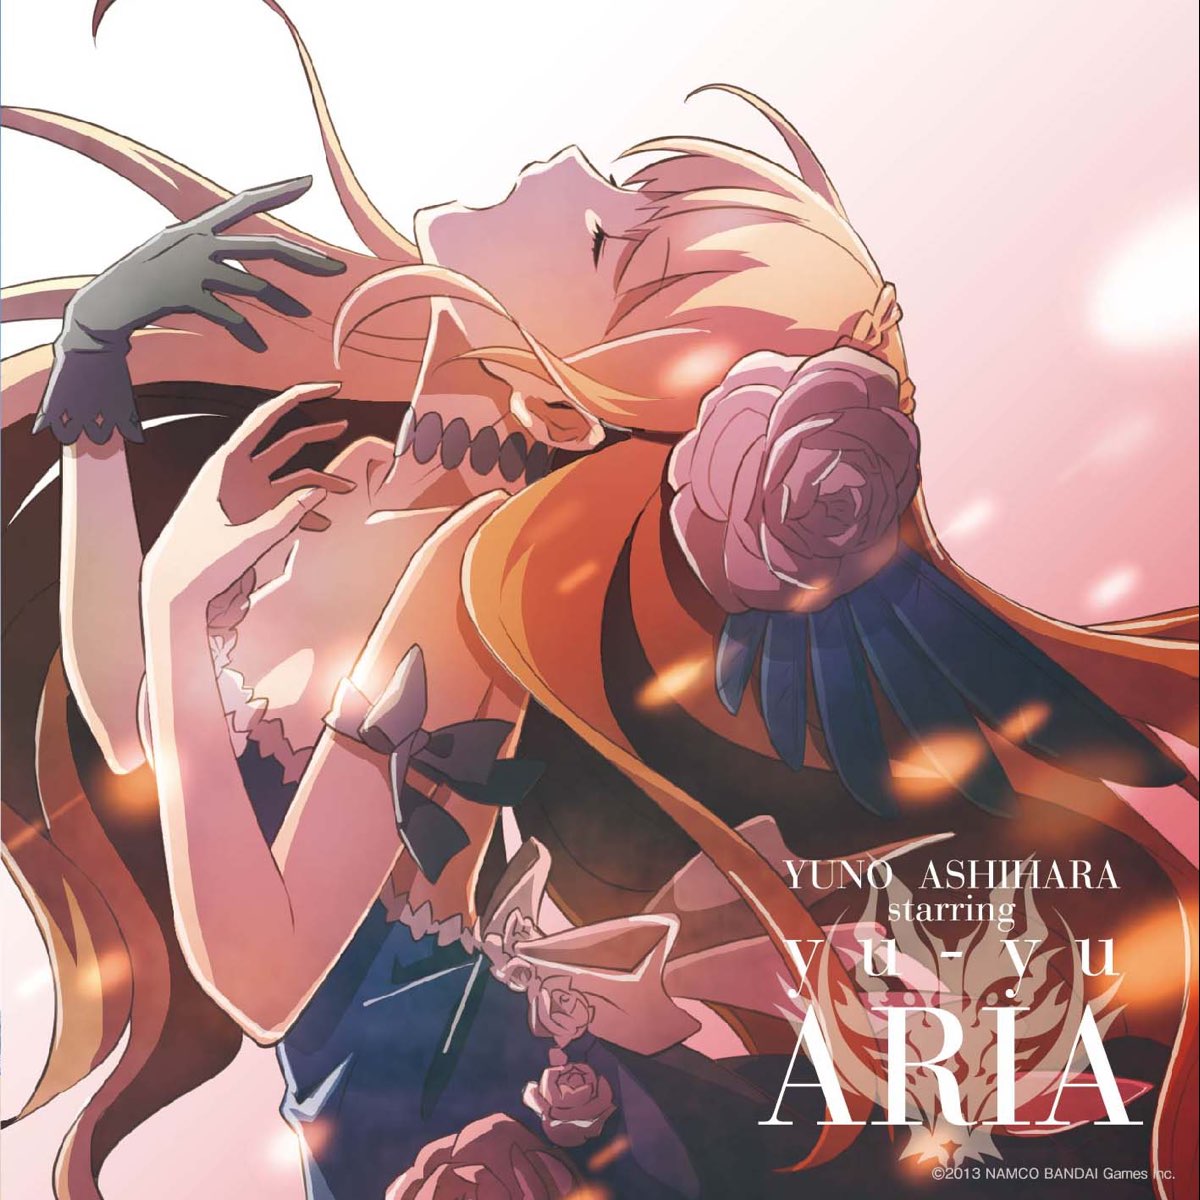 Aria by 葦原ユノ starring yu-yu on Apple Music